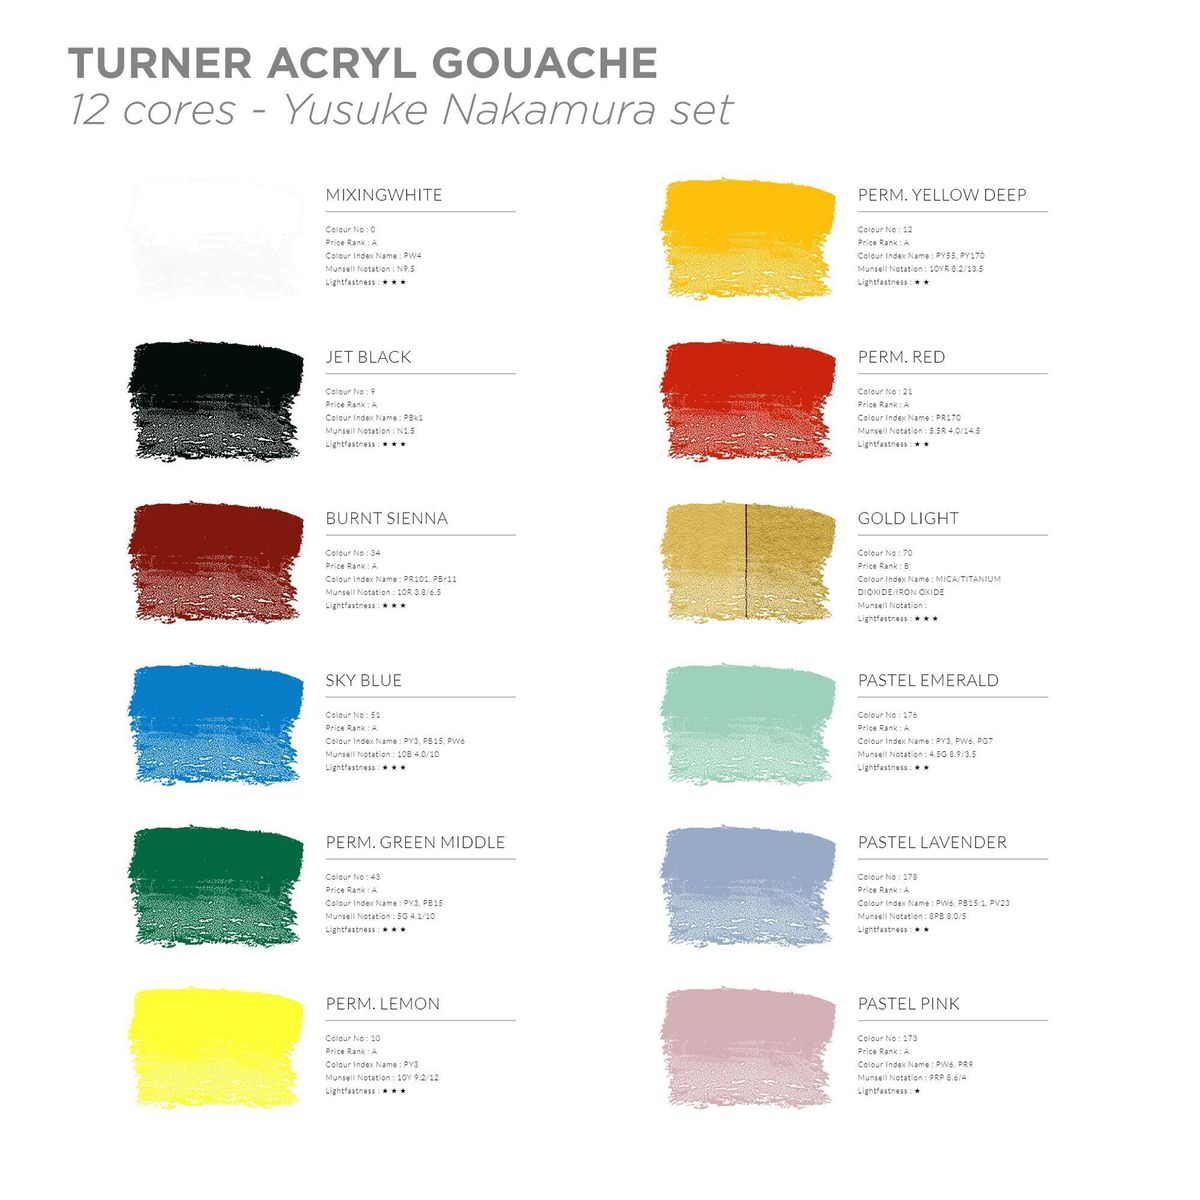 Kit Guache Acrílica Turner Colour Works Yusuke Nakamura C/ 12 Cores